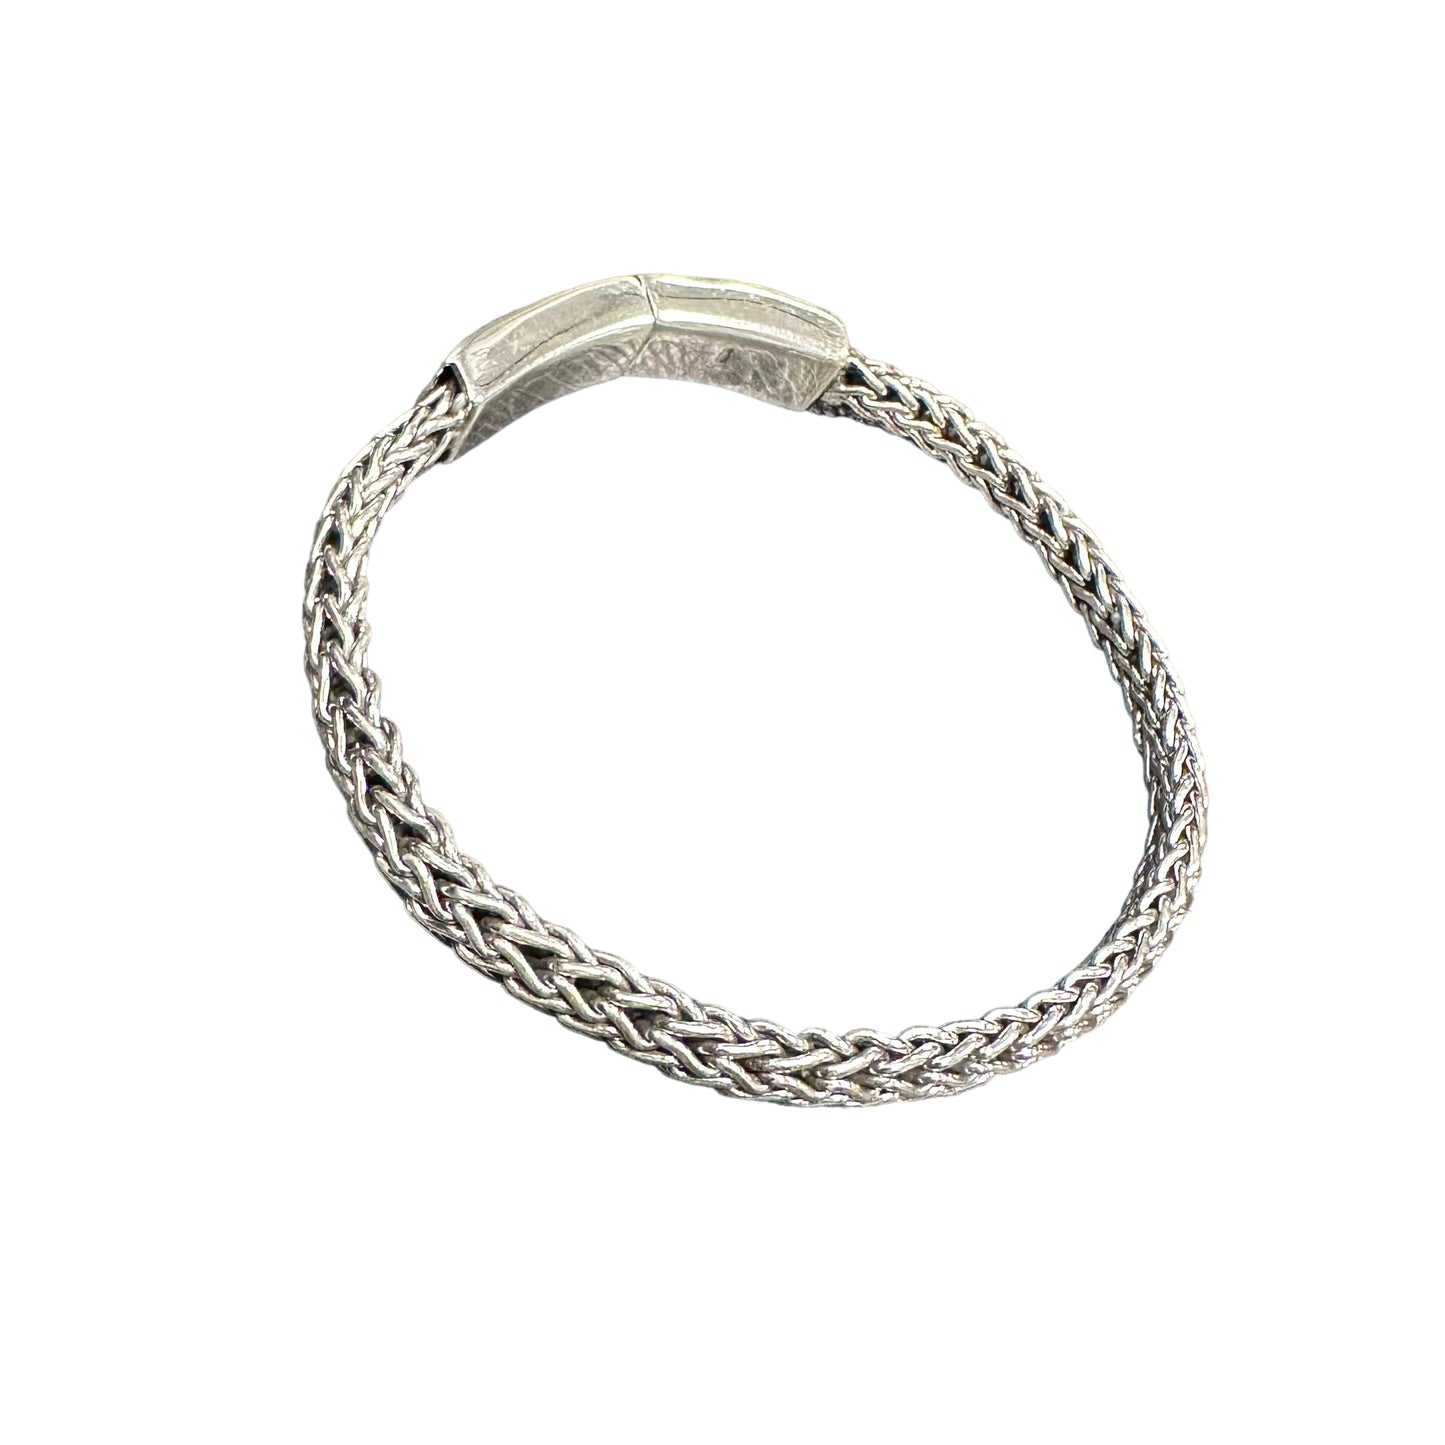 Handmade Bali Foxtail 8mm Sterling Silver Bracelet Chain